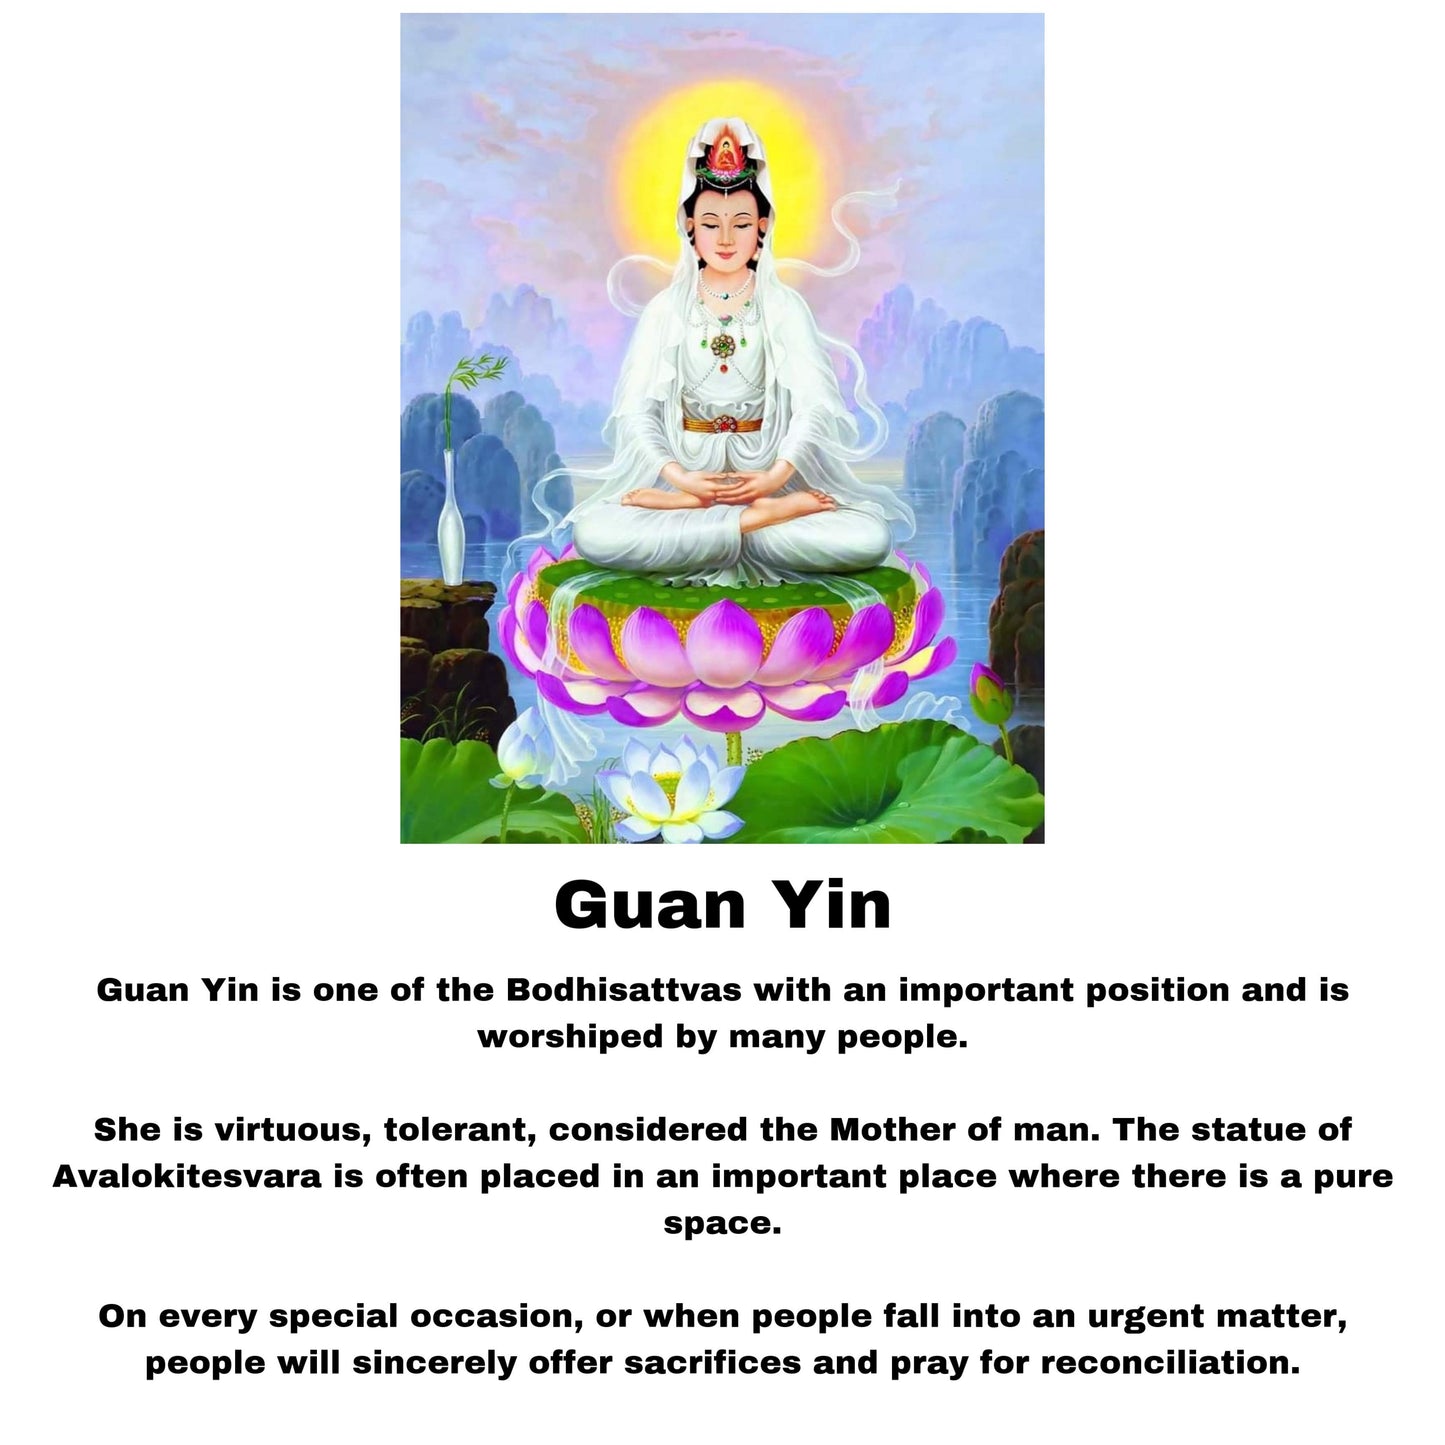 Rutilated Quartz Guan Yin Pendant #P175